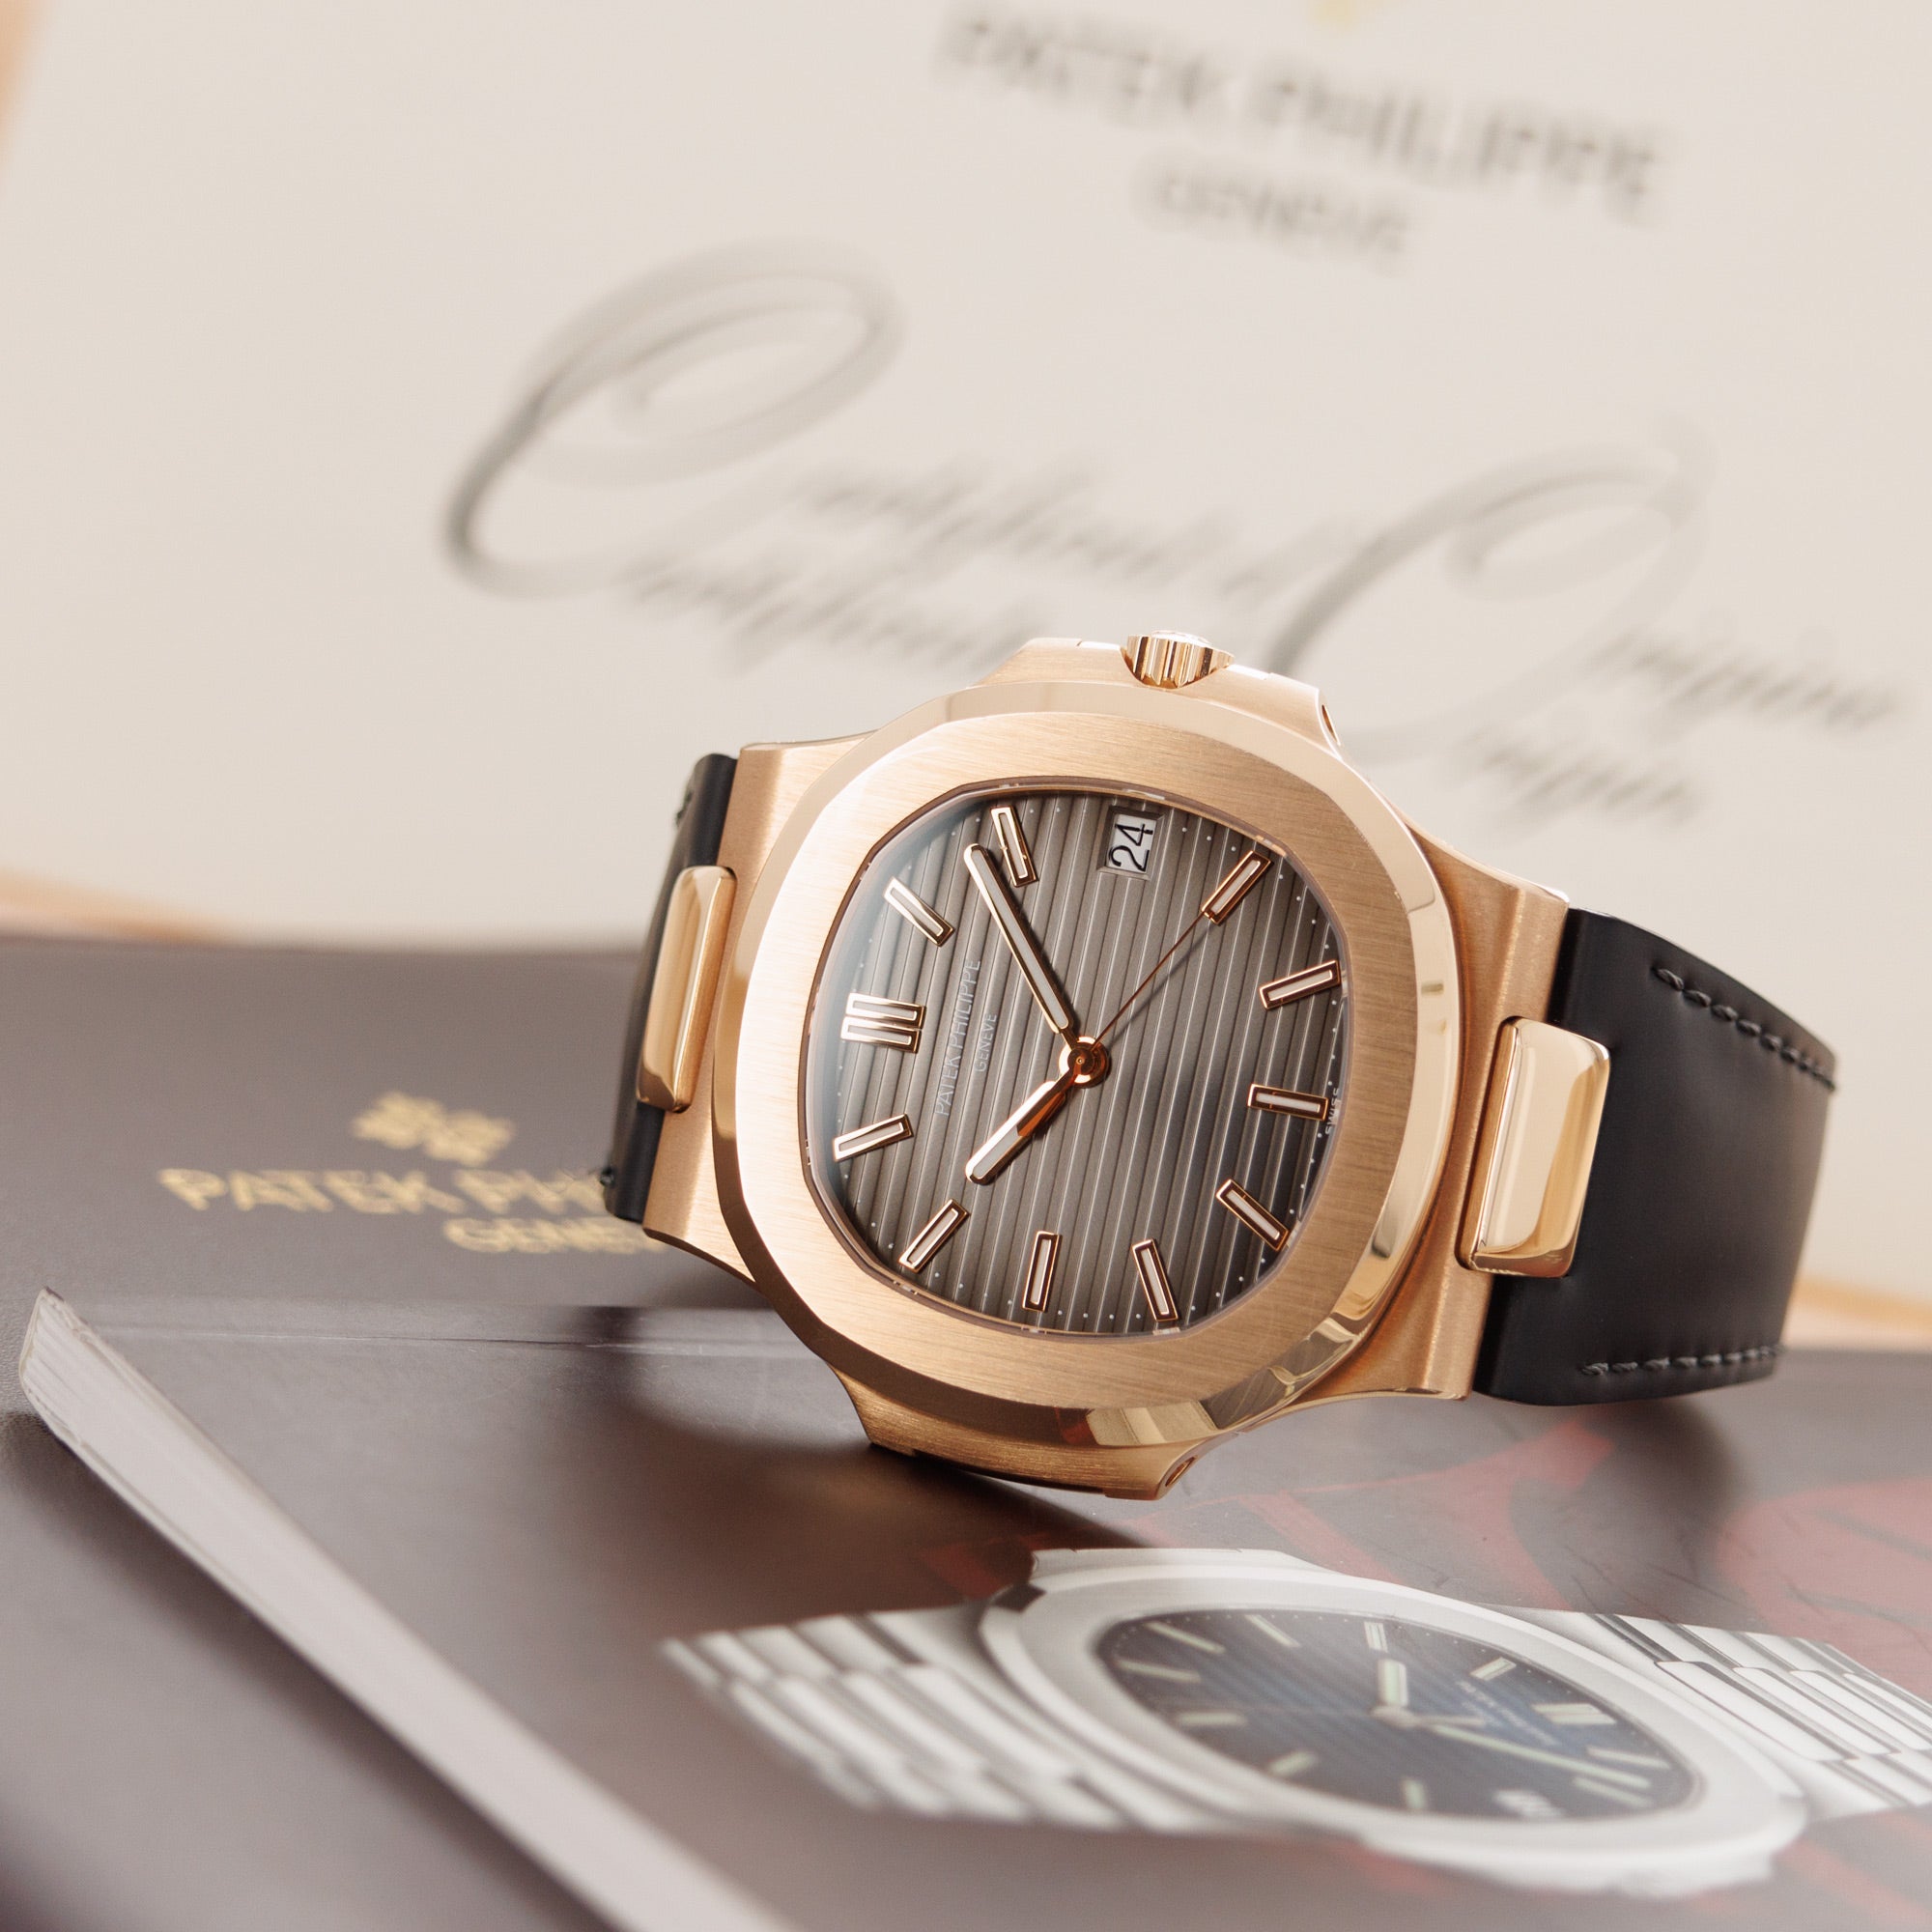 Patek Philippe - Patek Philippe Rose Gold Nautilus Ref. 5711 - The Keystone Watches